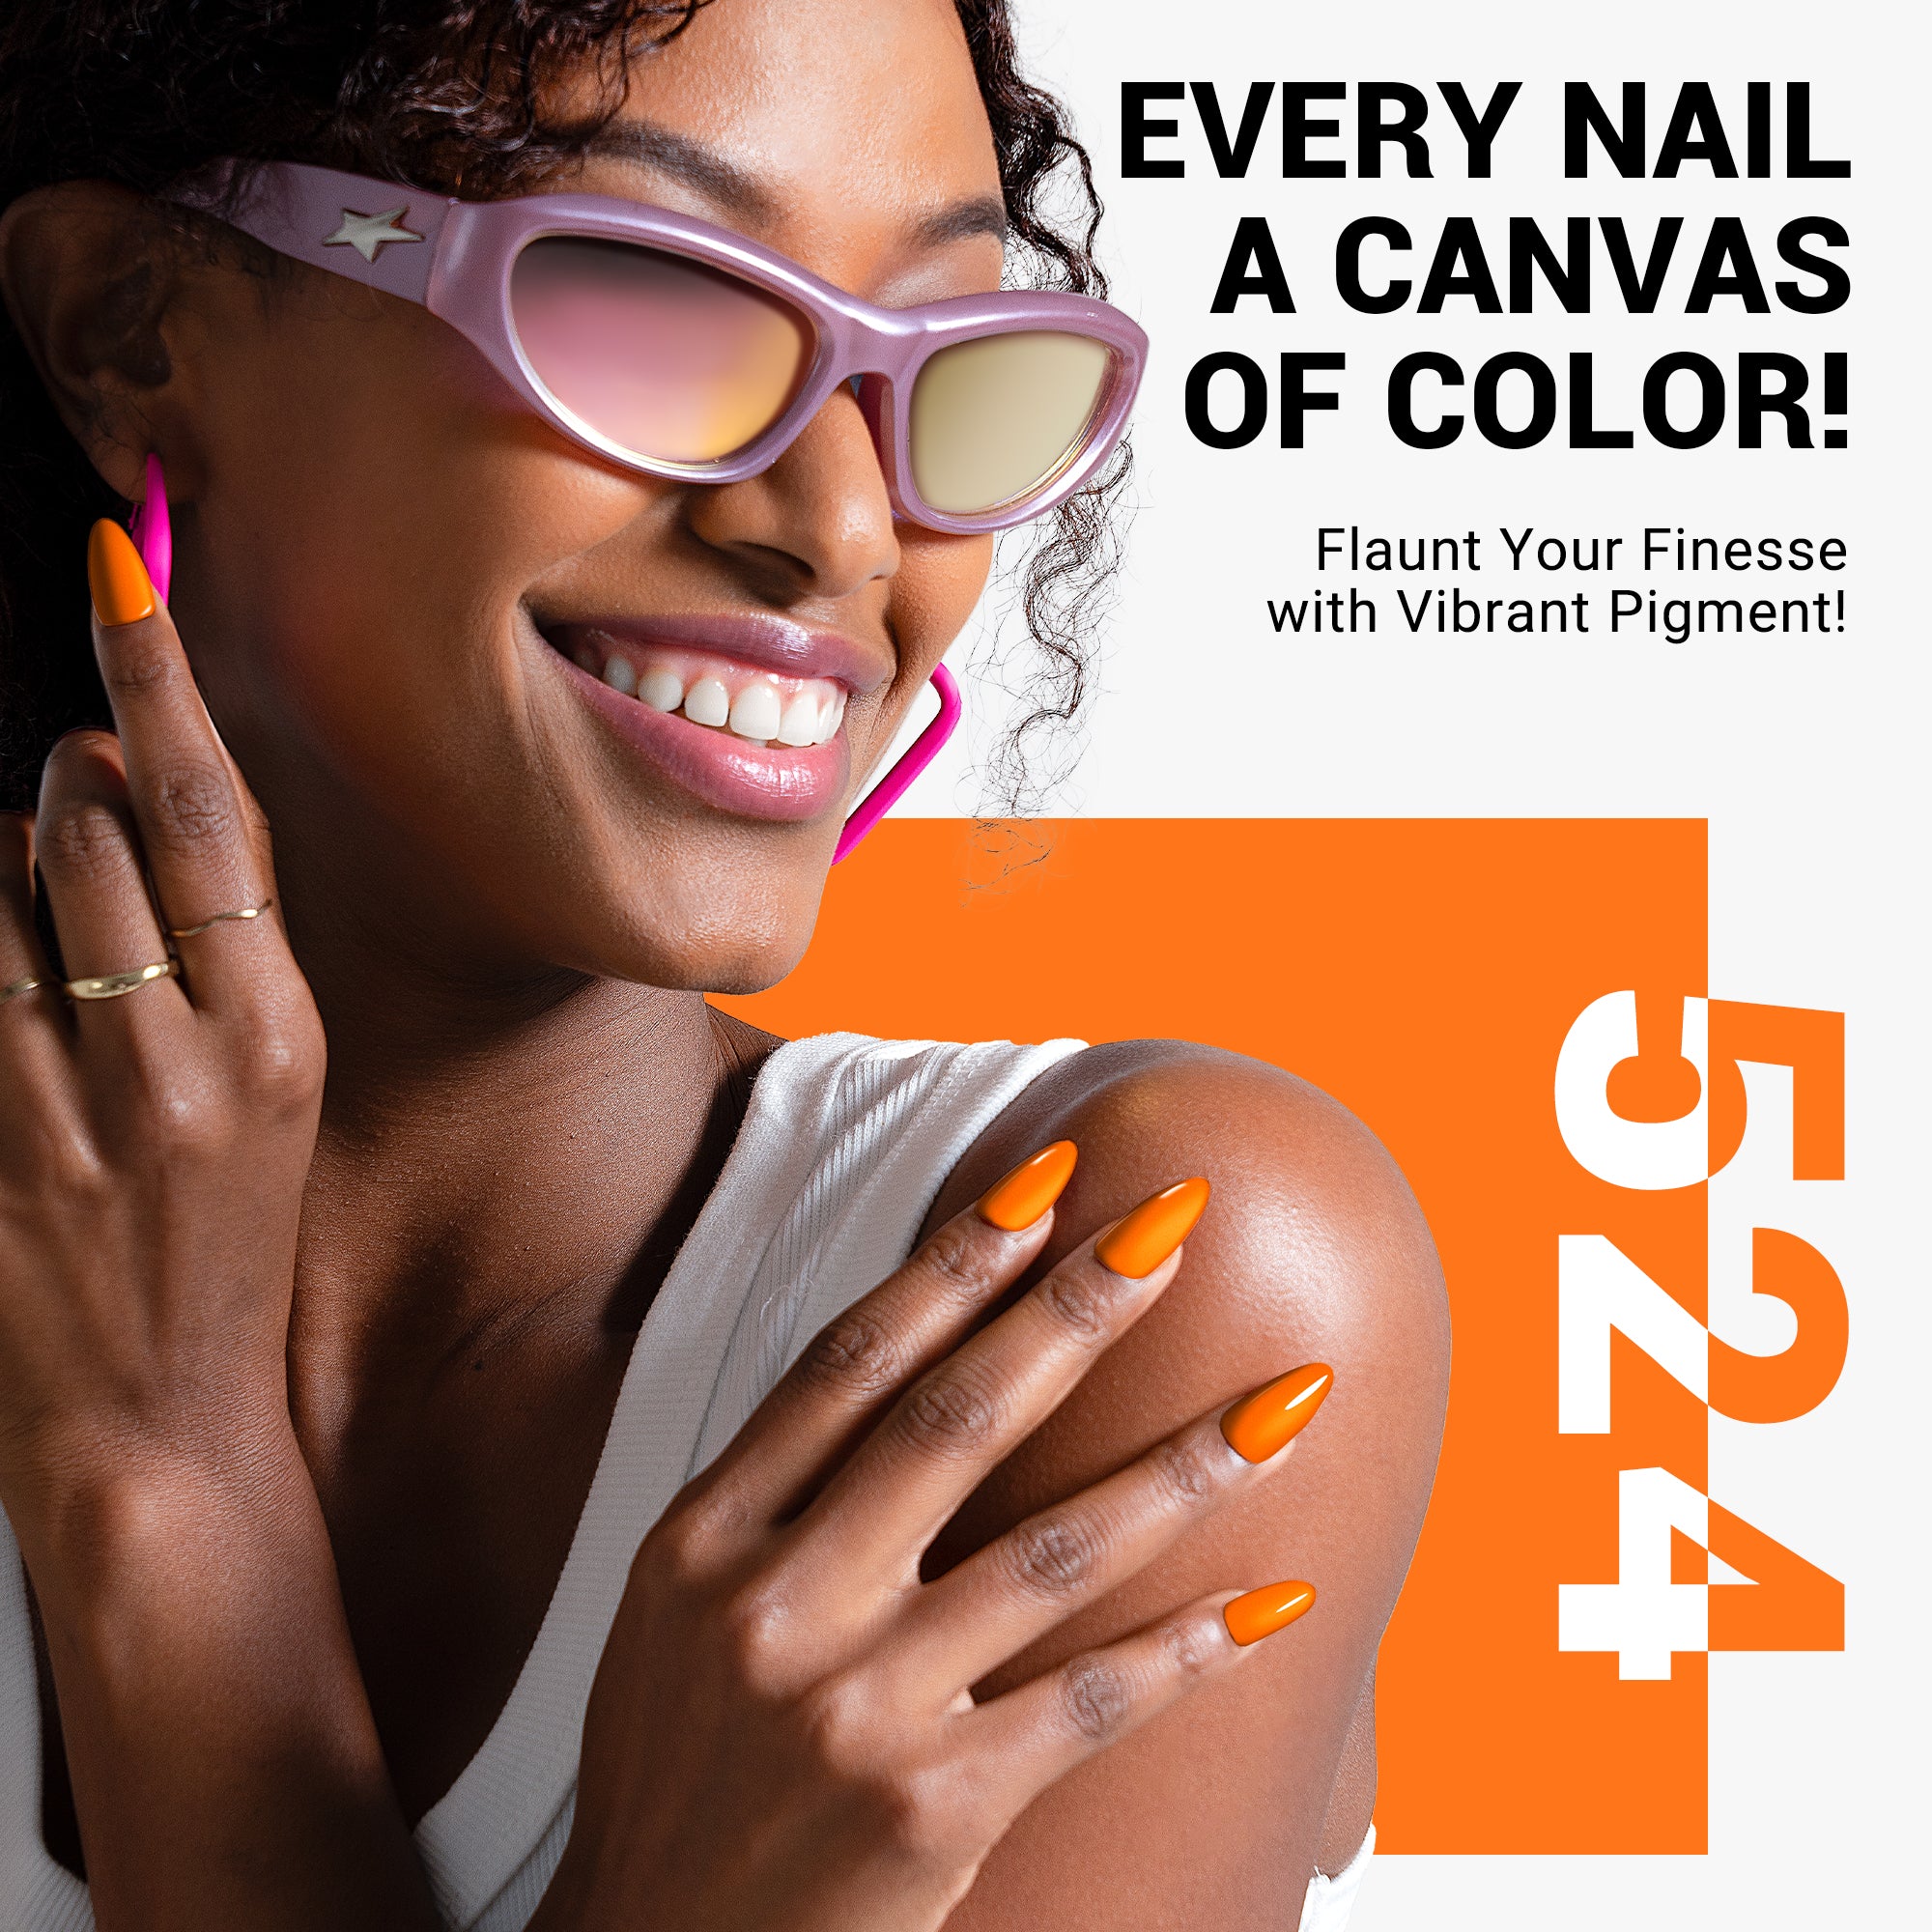 524 Neon Orange - Gel Nail Polish(15ml)